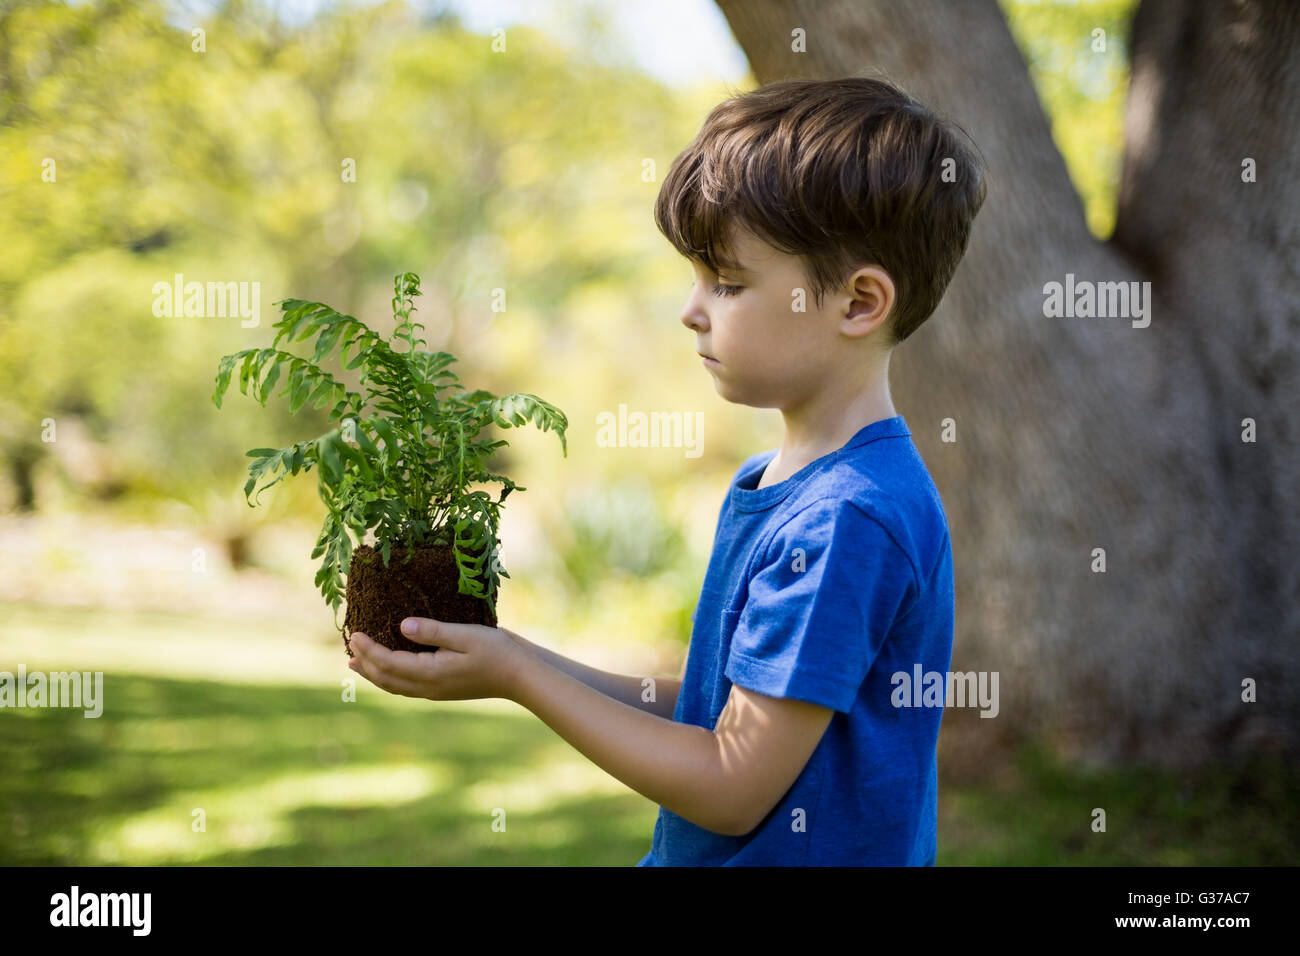 Boy holding sapling plant Stock Photo